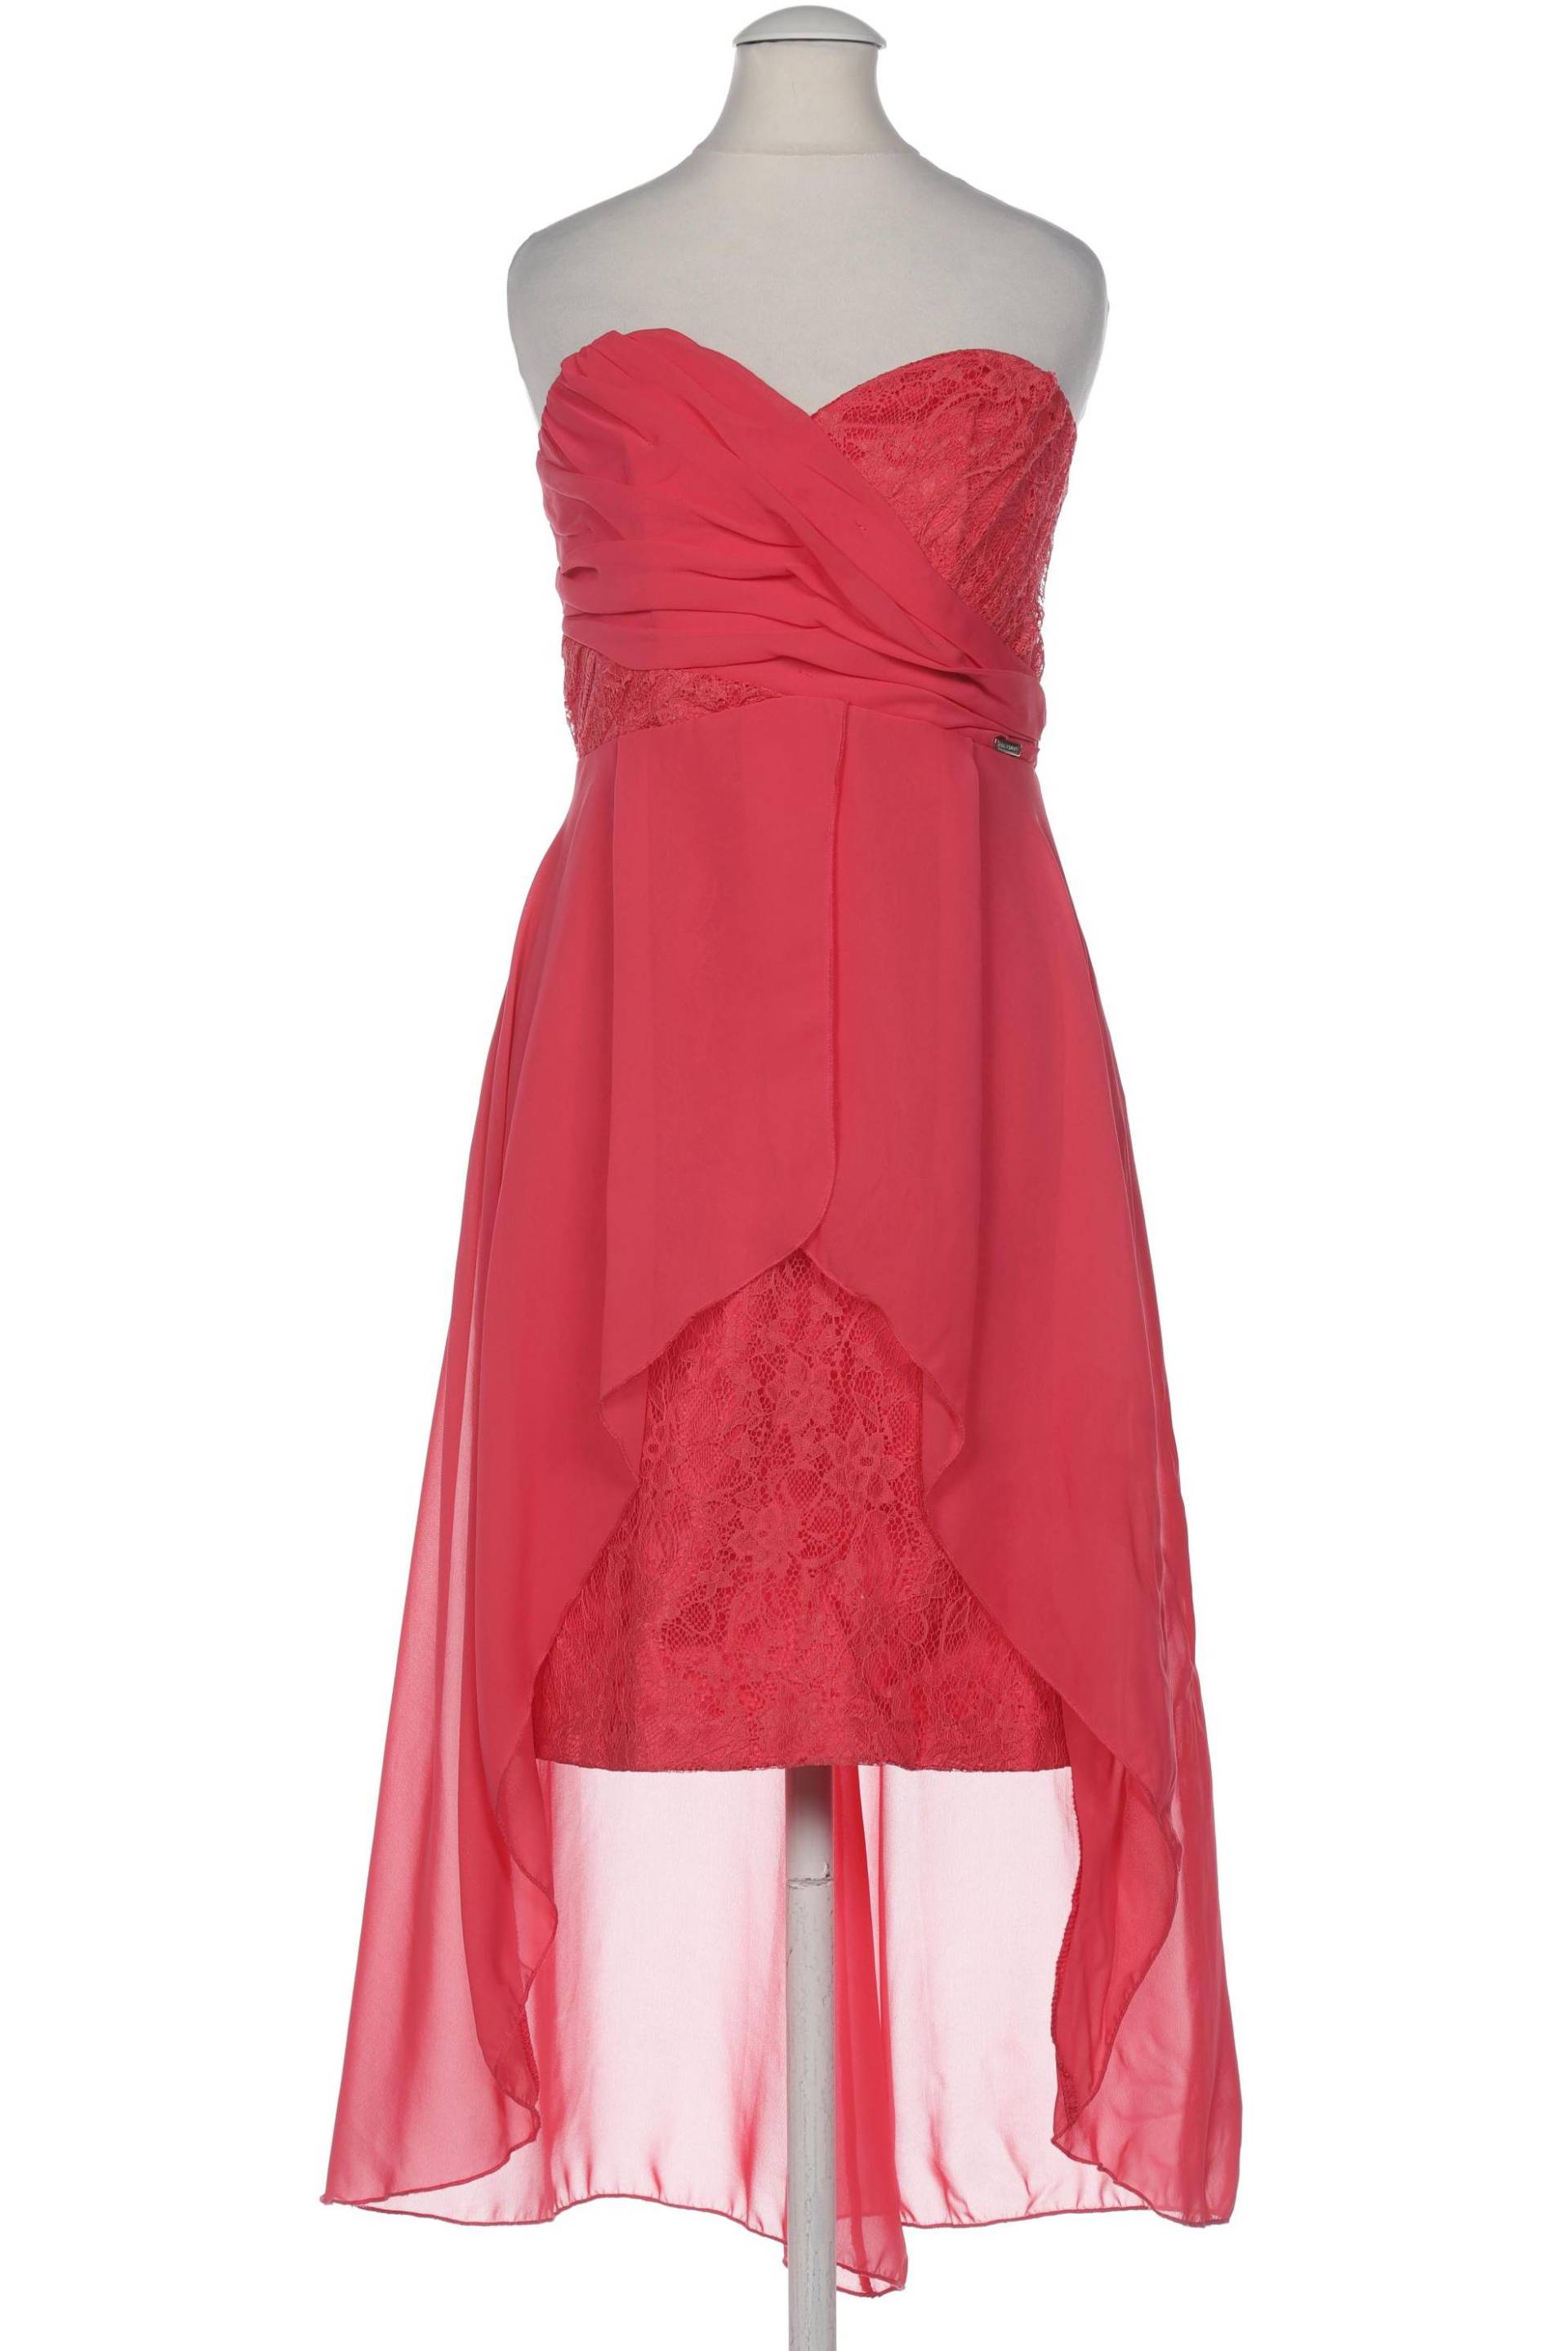 Rinascimento Damen Kleid, rot, Gr. 38 von RINASCIMENTO